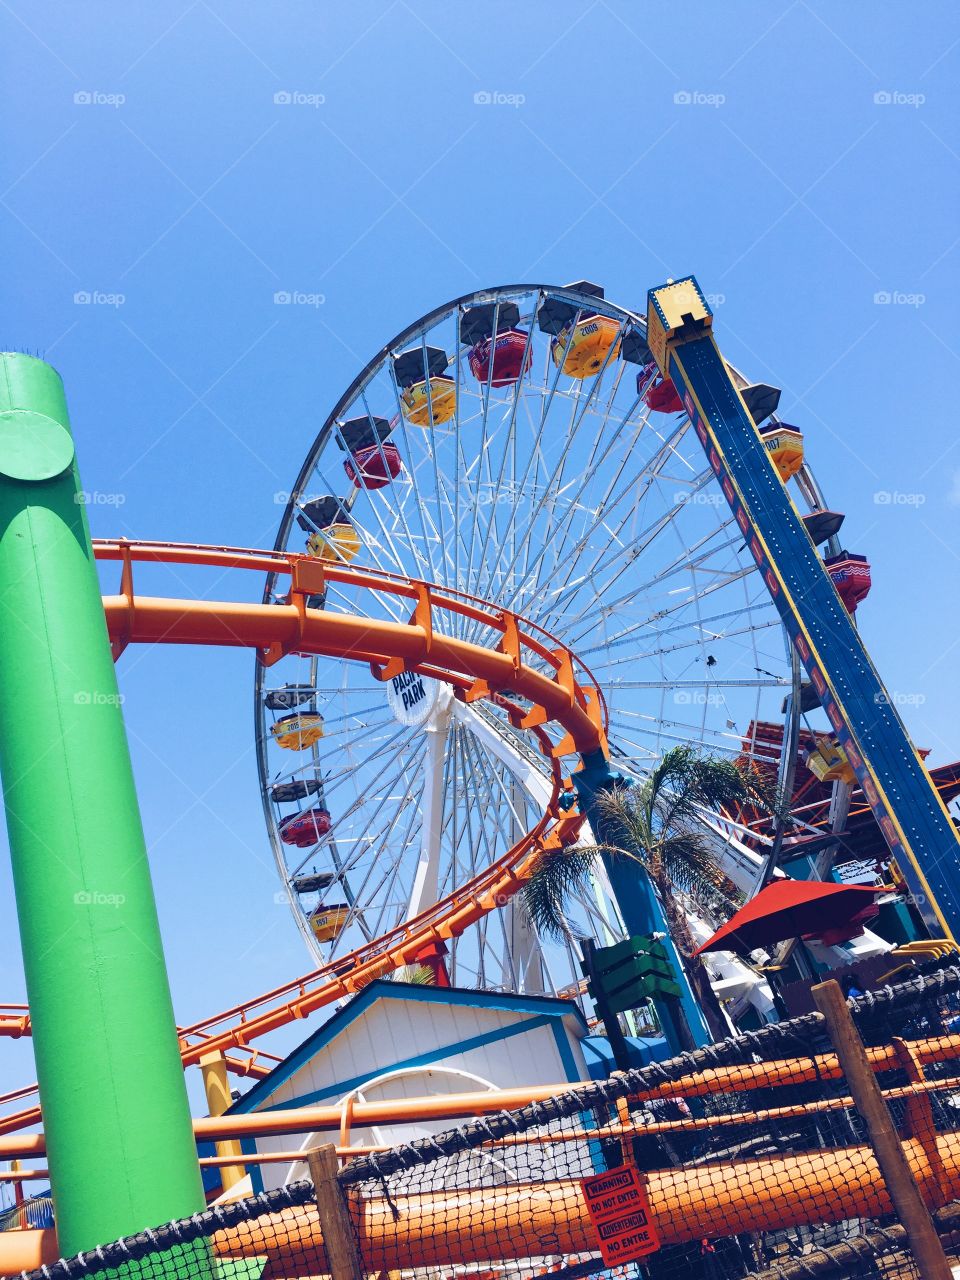 Carnival, Carousel, Entertainment, Fairground, Ferris Wheel